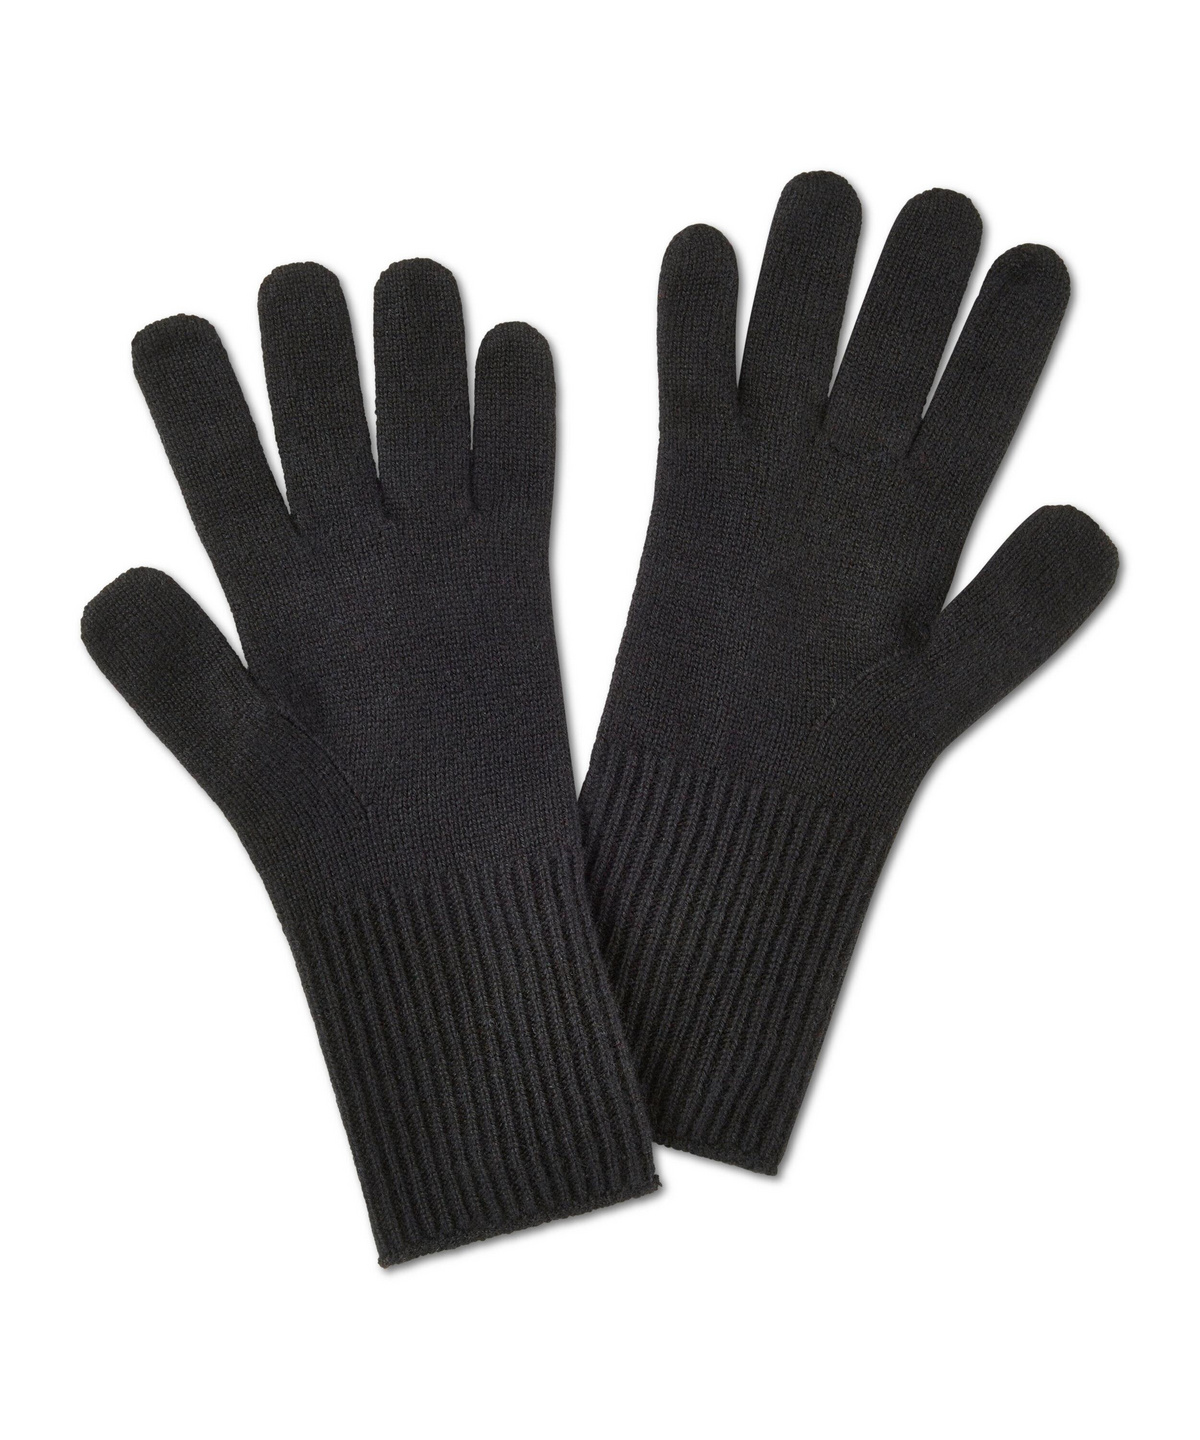 Falke Vingerandschoenen \u201eW-pbrlnp\u201c zwart Accessoires Handschoenen Vingerhandschoenen 